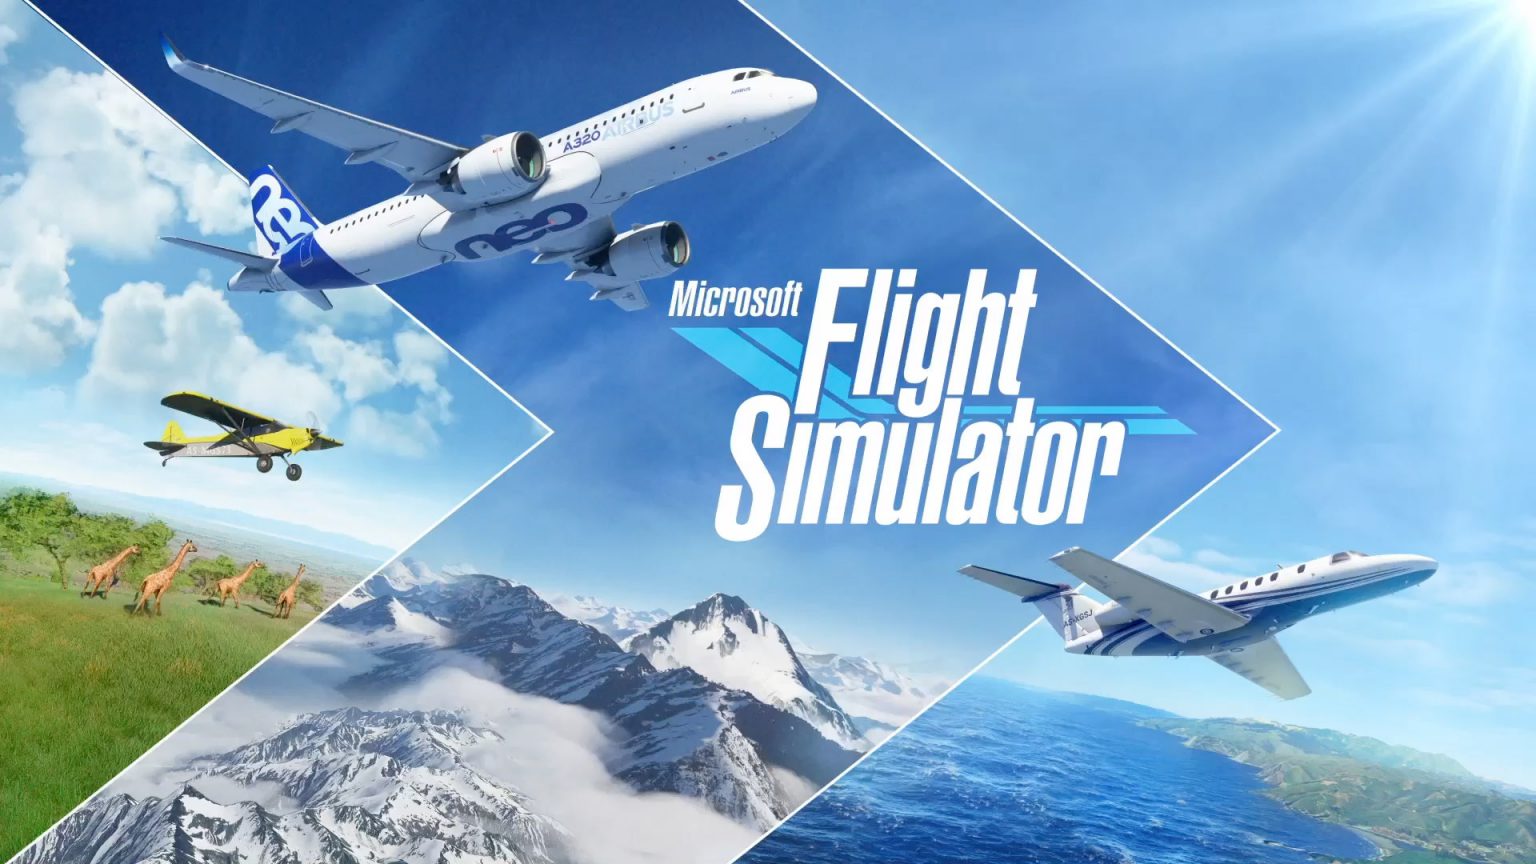 microsoft flight simulator 2020 - flight simulator - generacion xbox